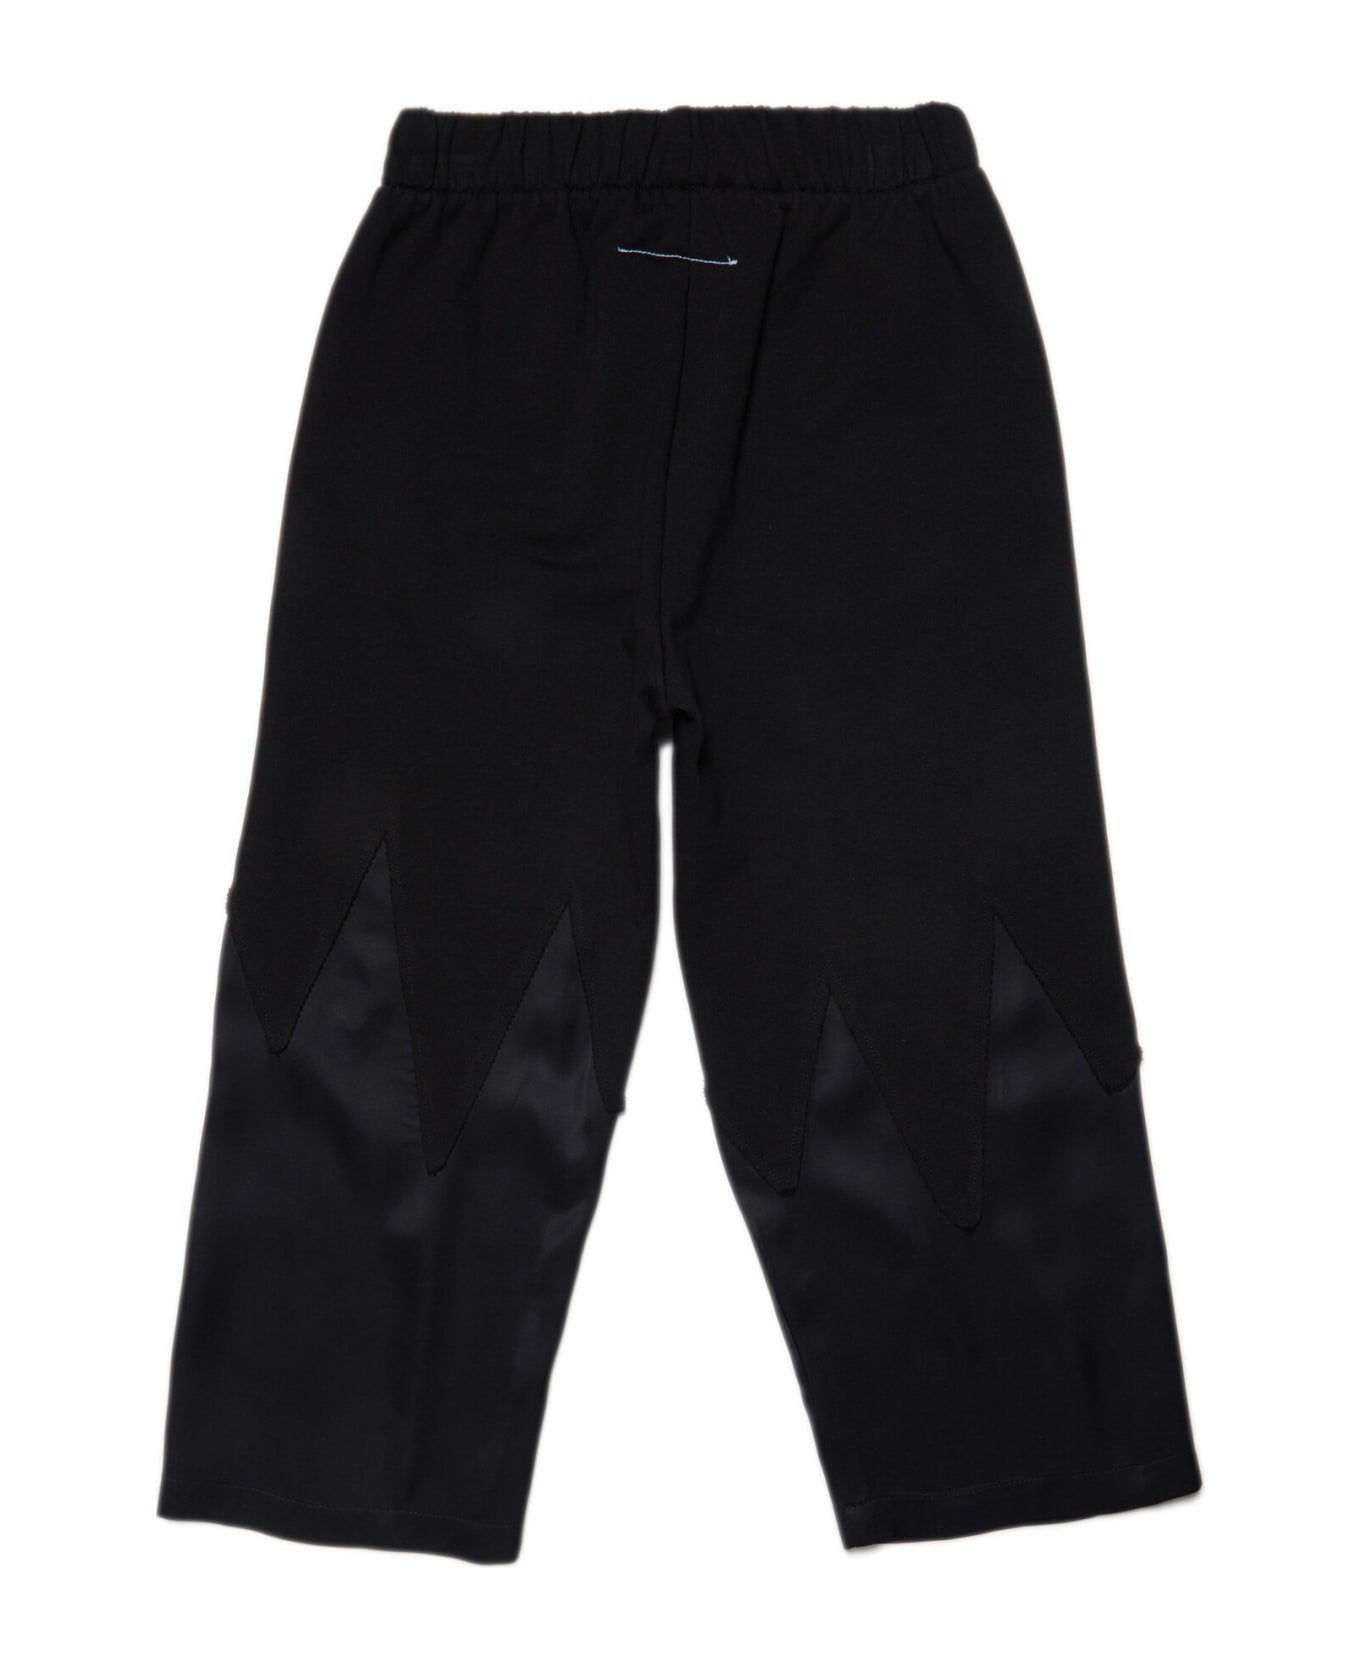 MM6 Maison Margiela Mm6p60u Trousers Maison Margiela Black Fleece Pants With Satin At The Bottom - Black